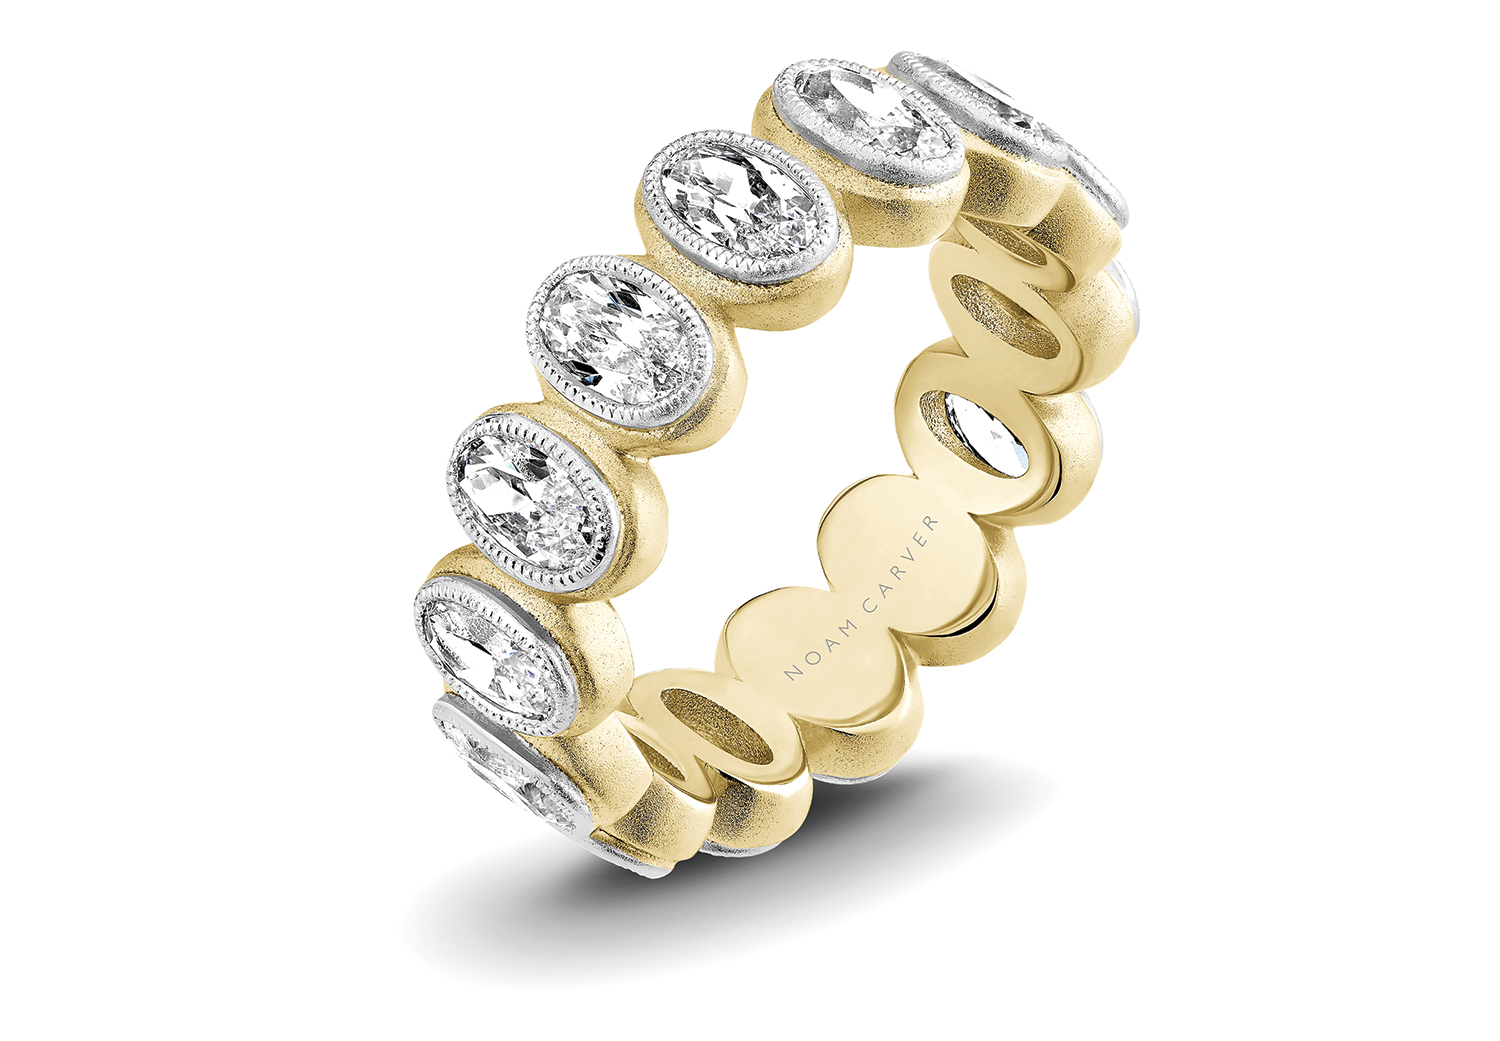 INSTORE Design Awards 2023 – Engagement/Wedding Jewelry Over $5,000